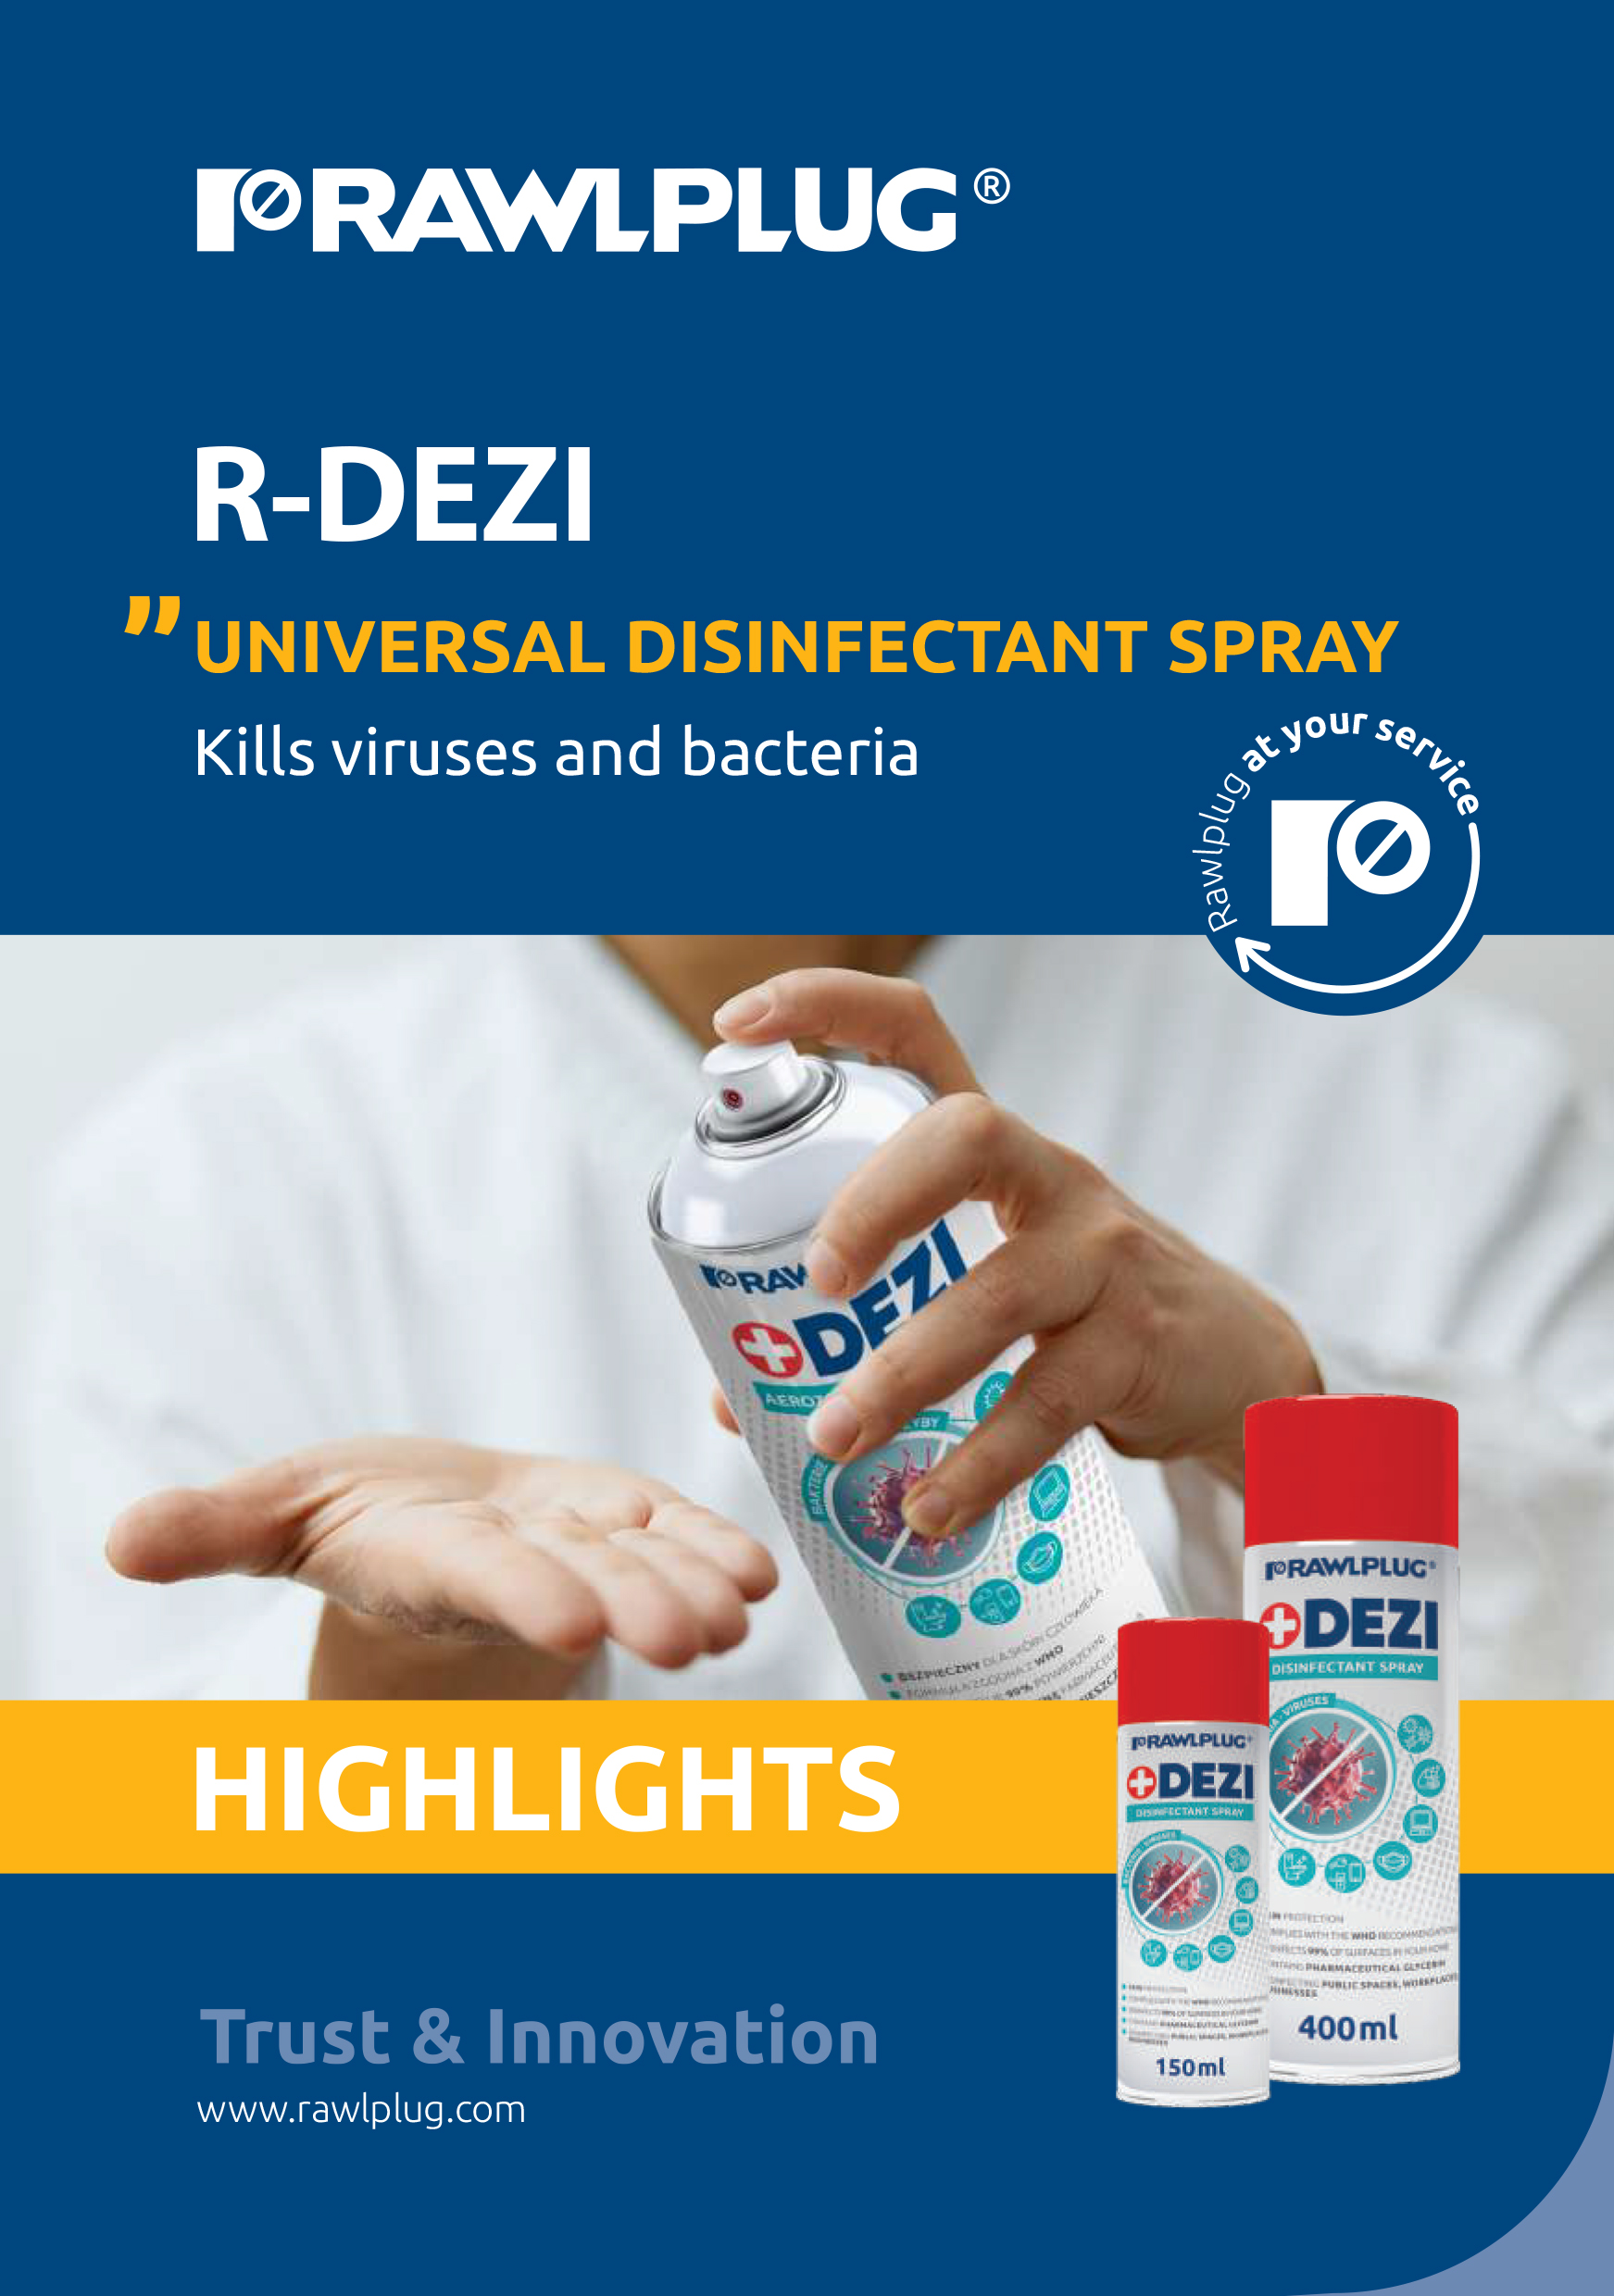 Rawlplug DEZI Universal Disinfectant Spray